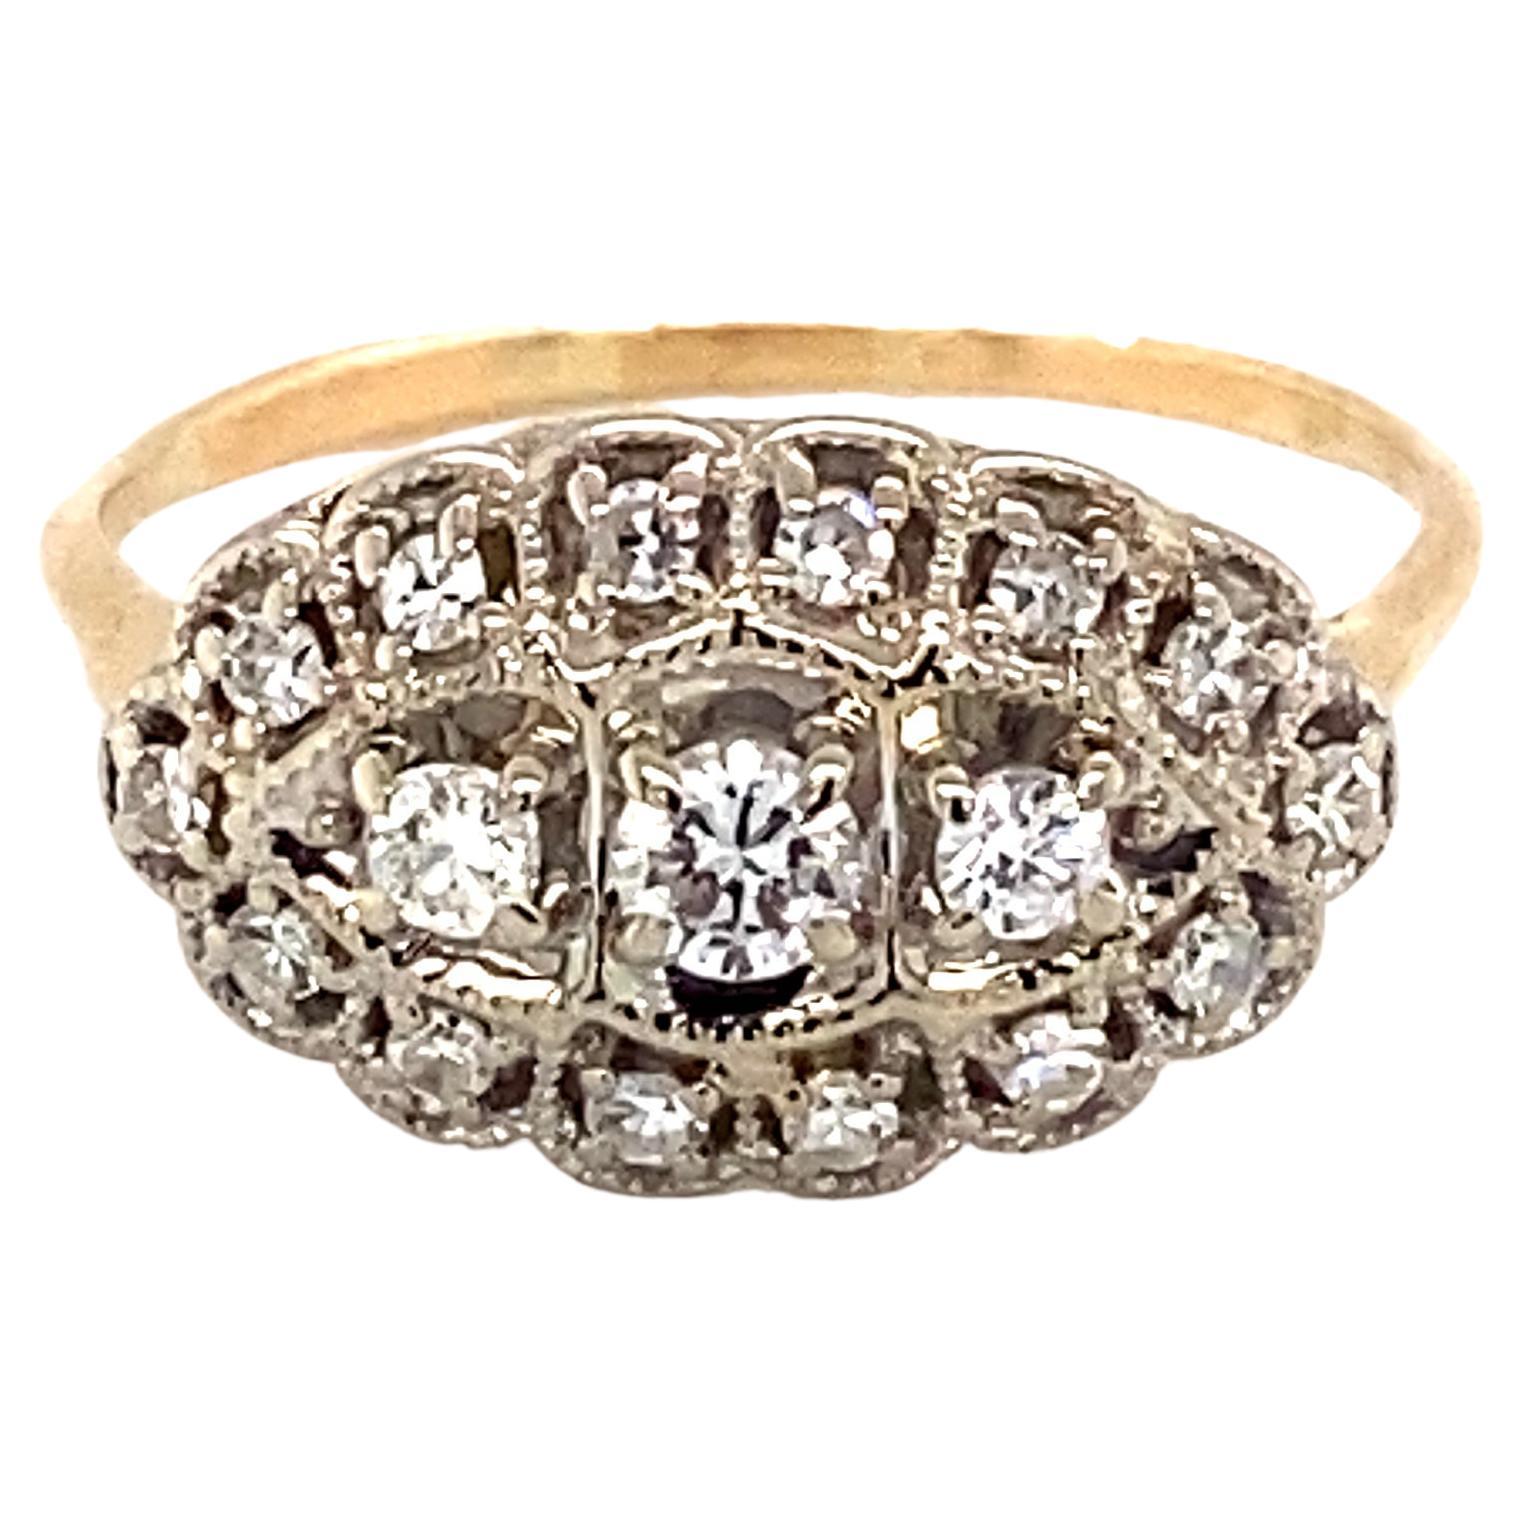 1930s Art Deco 0.25 Carat Diamond Ring in 14 Karat White and Yellow Gold